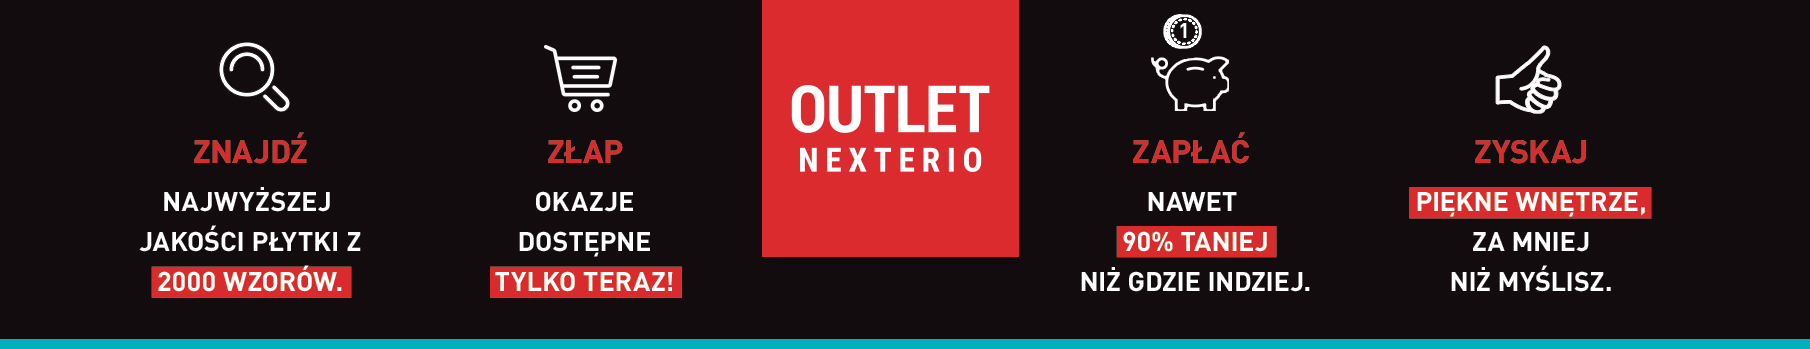 Outlet Nexterio Łódź